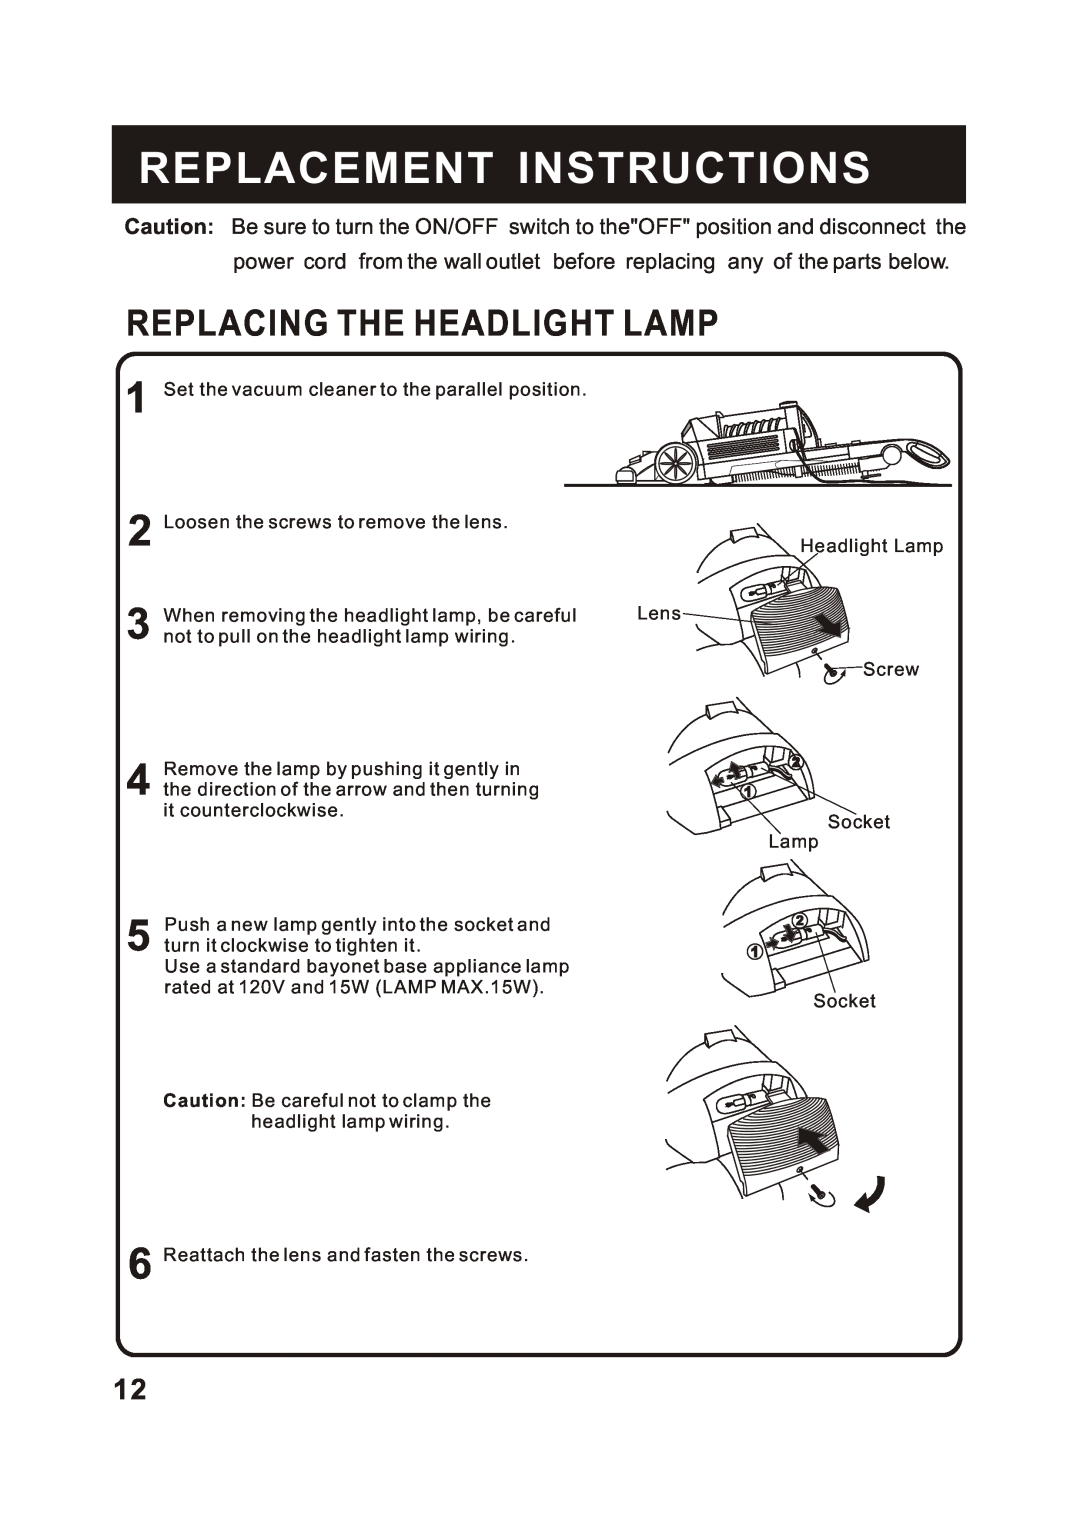 Fantom Vacuum FM780 instruction manual Replacement Instructions, Replacing The Headlight Lamp 